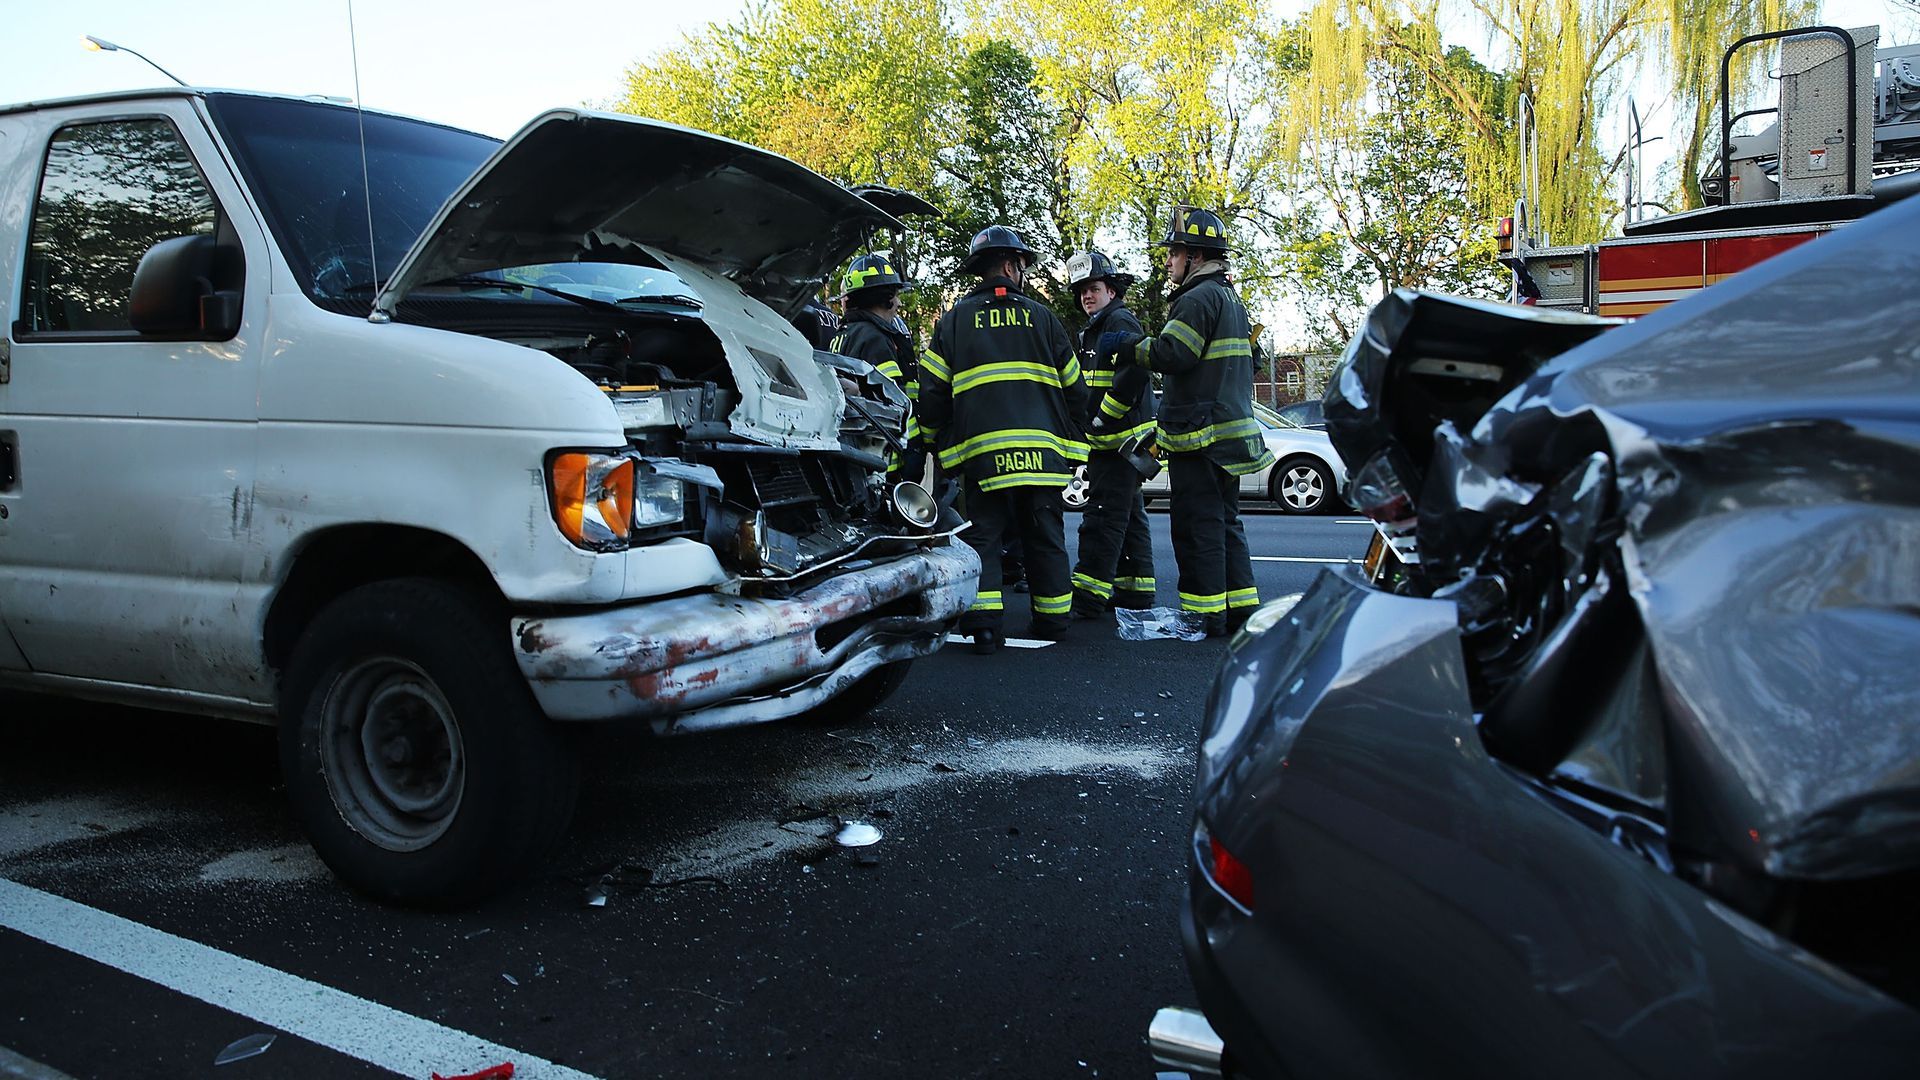 Cars damaged post-collision.